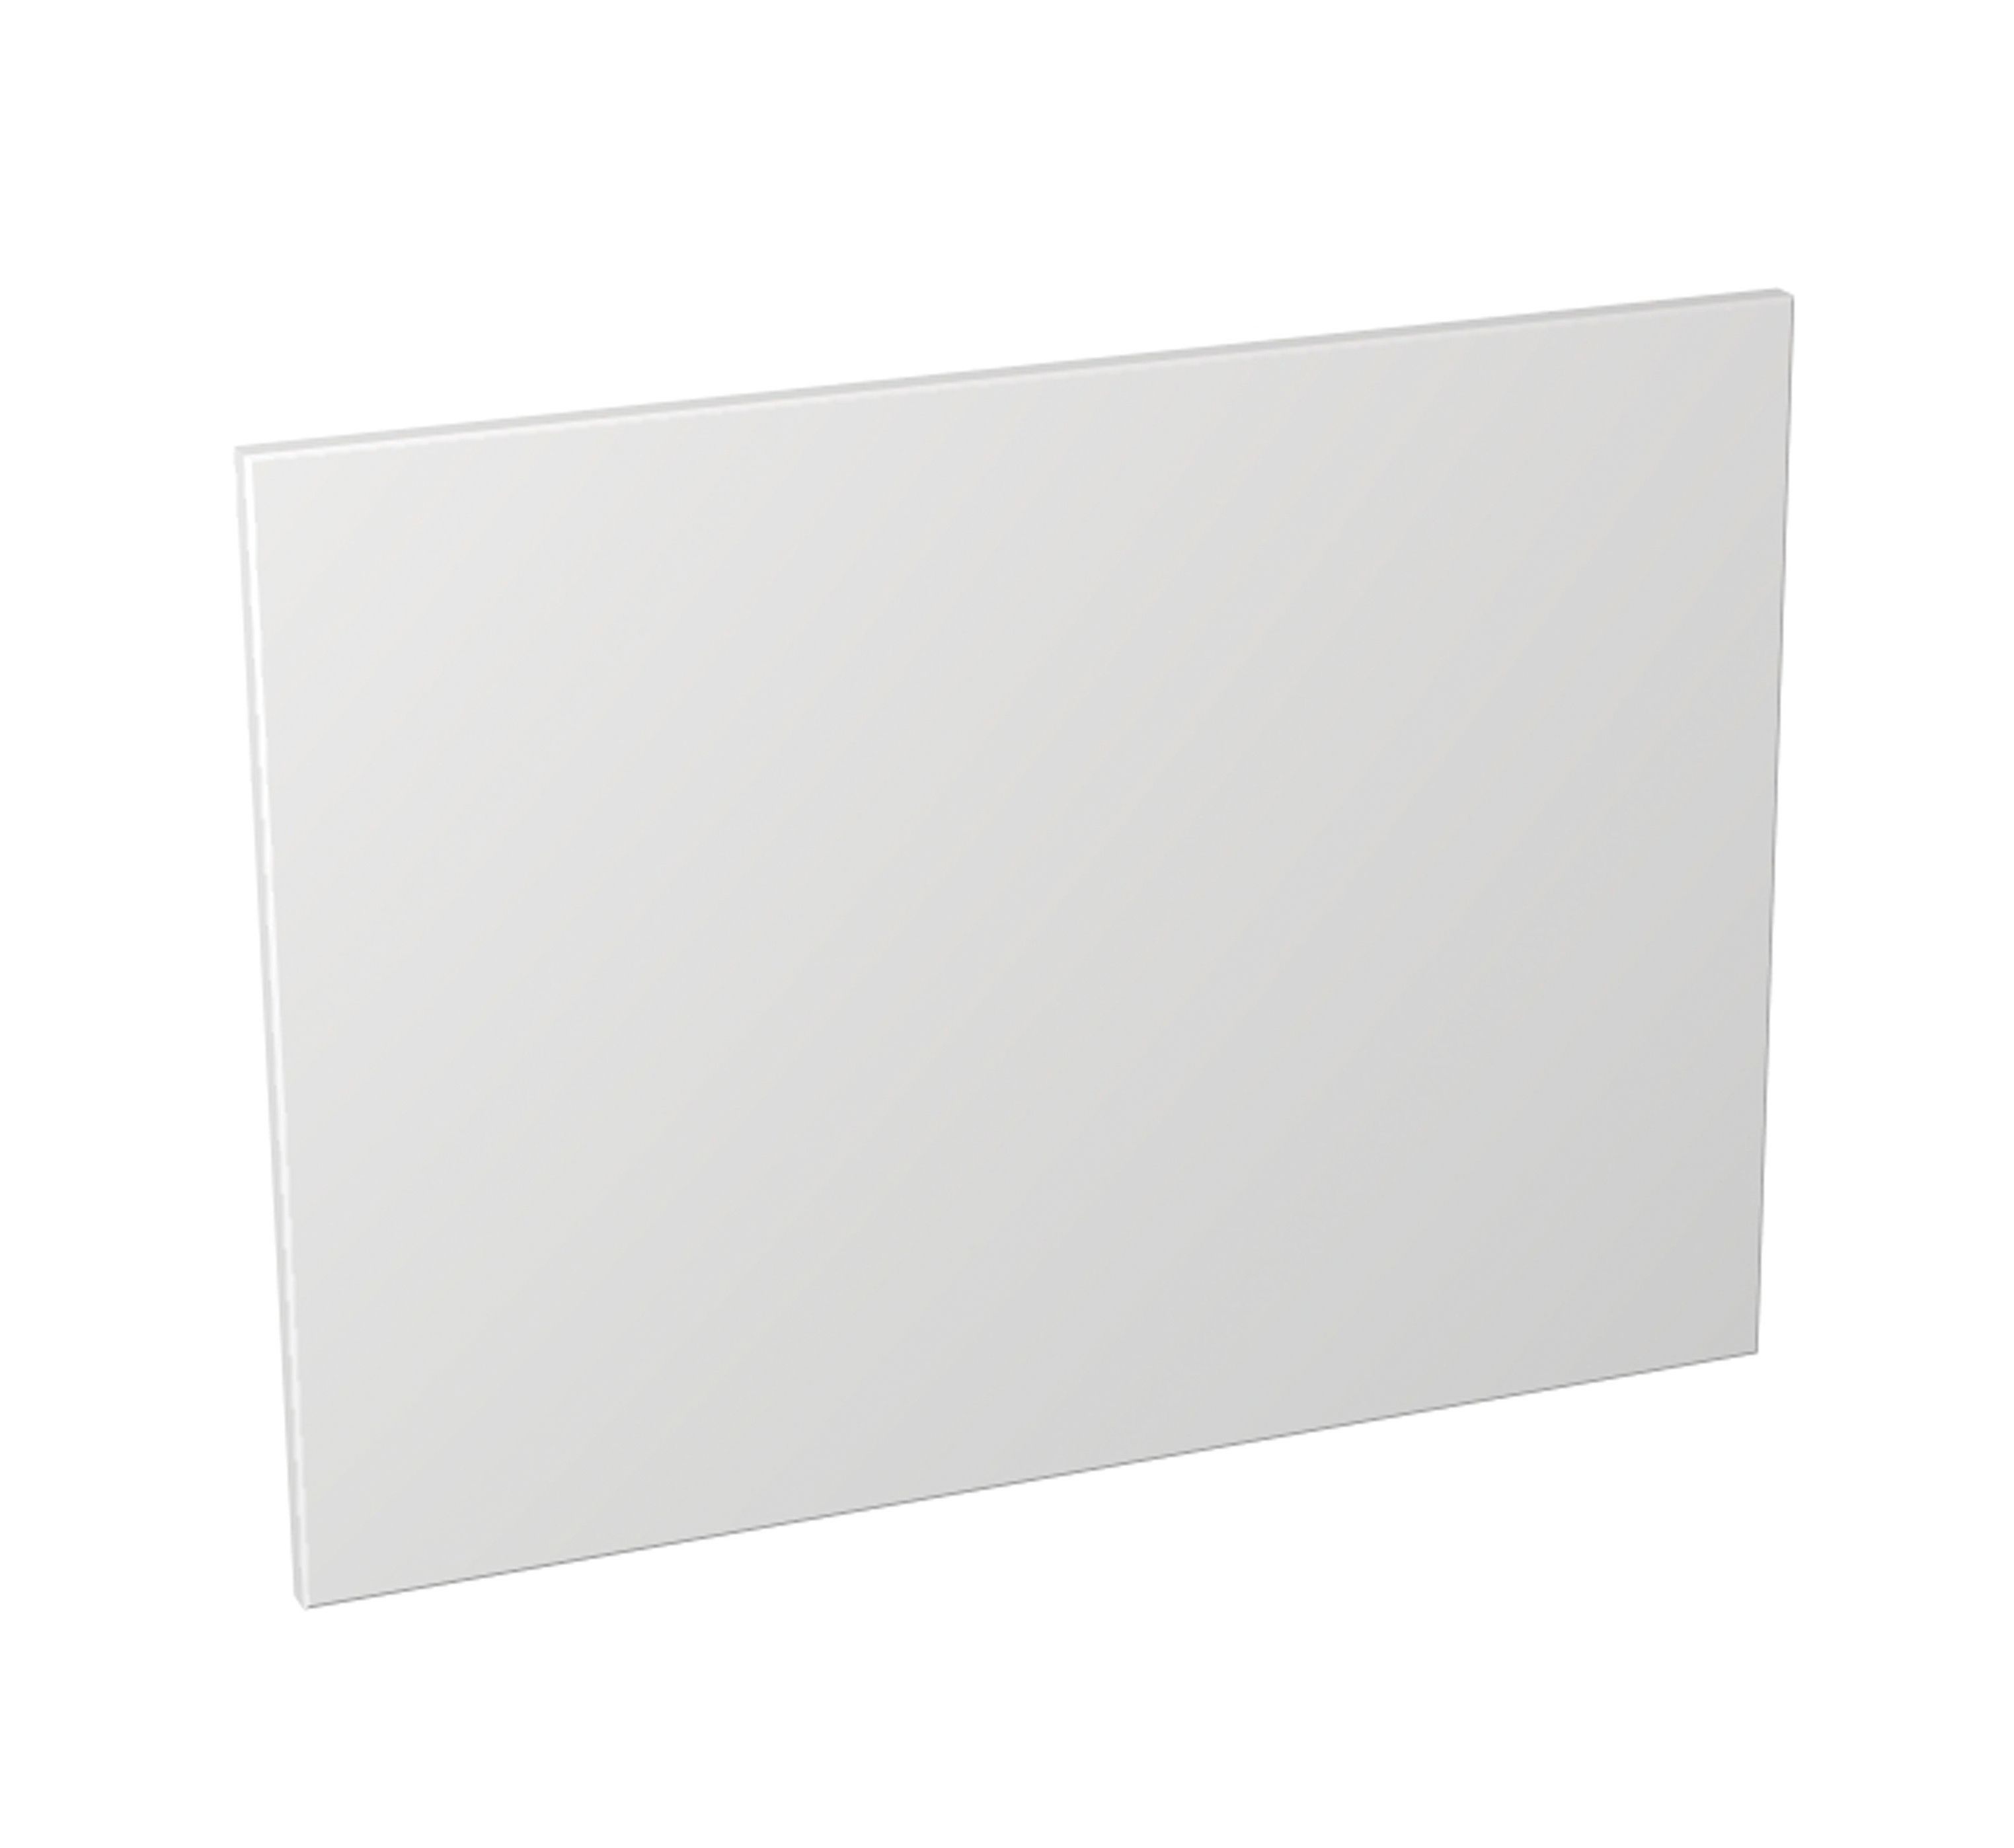 Image of Wickes Orlando White Gloss Slab Appliance Door (D) - 600 x 437mm